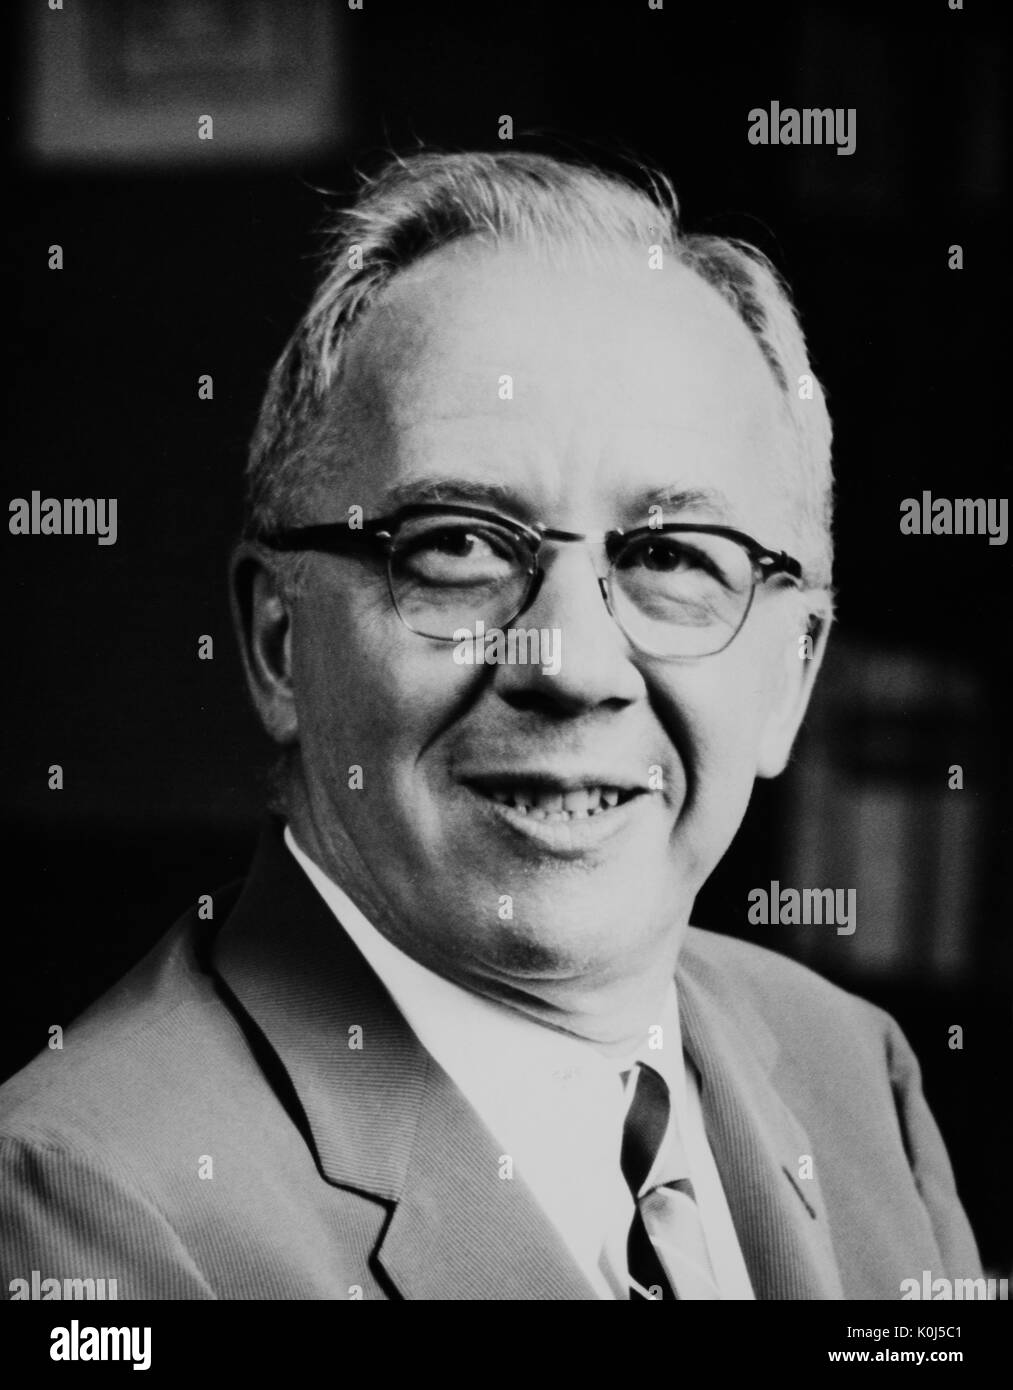 Seated headshot portrait of Don Cameron Allen, a professor of English literature at The Johns Hopkins University. 1963. Stock Photo